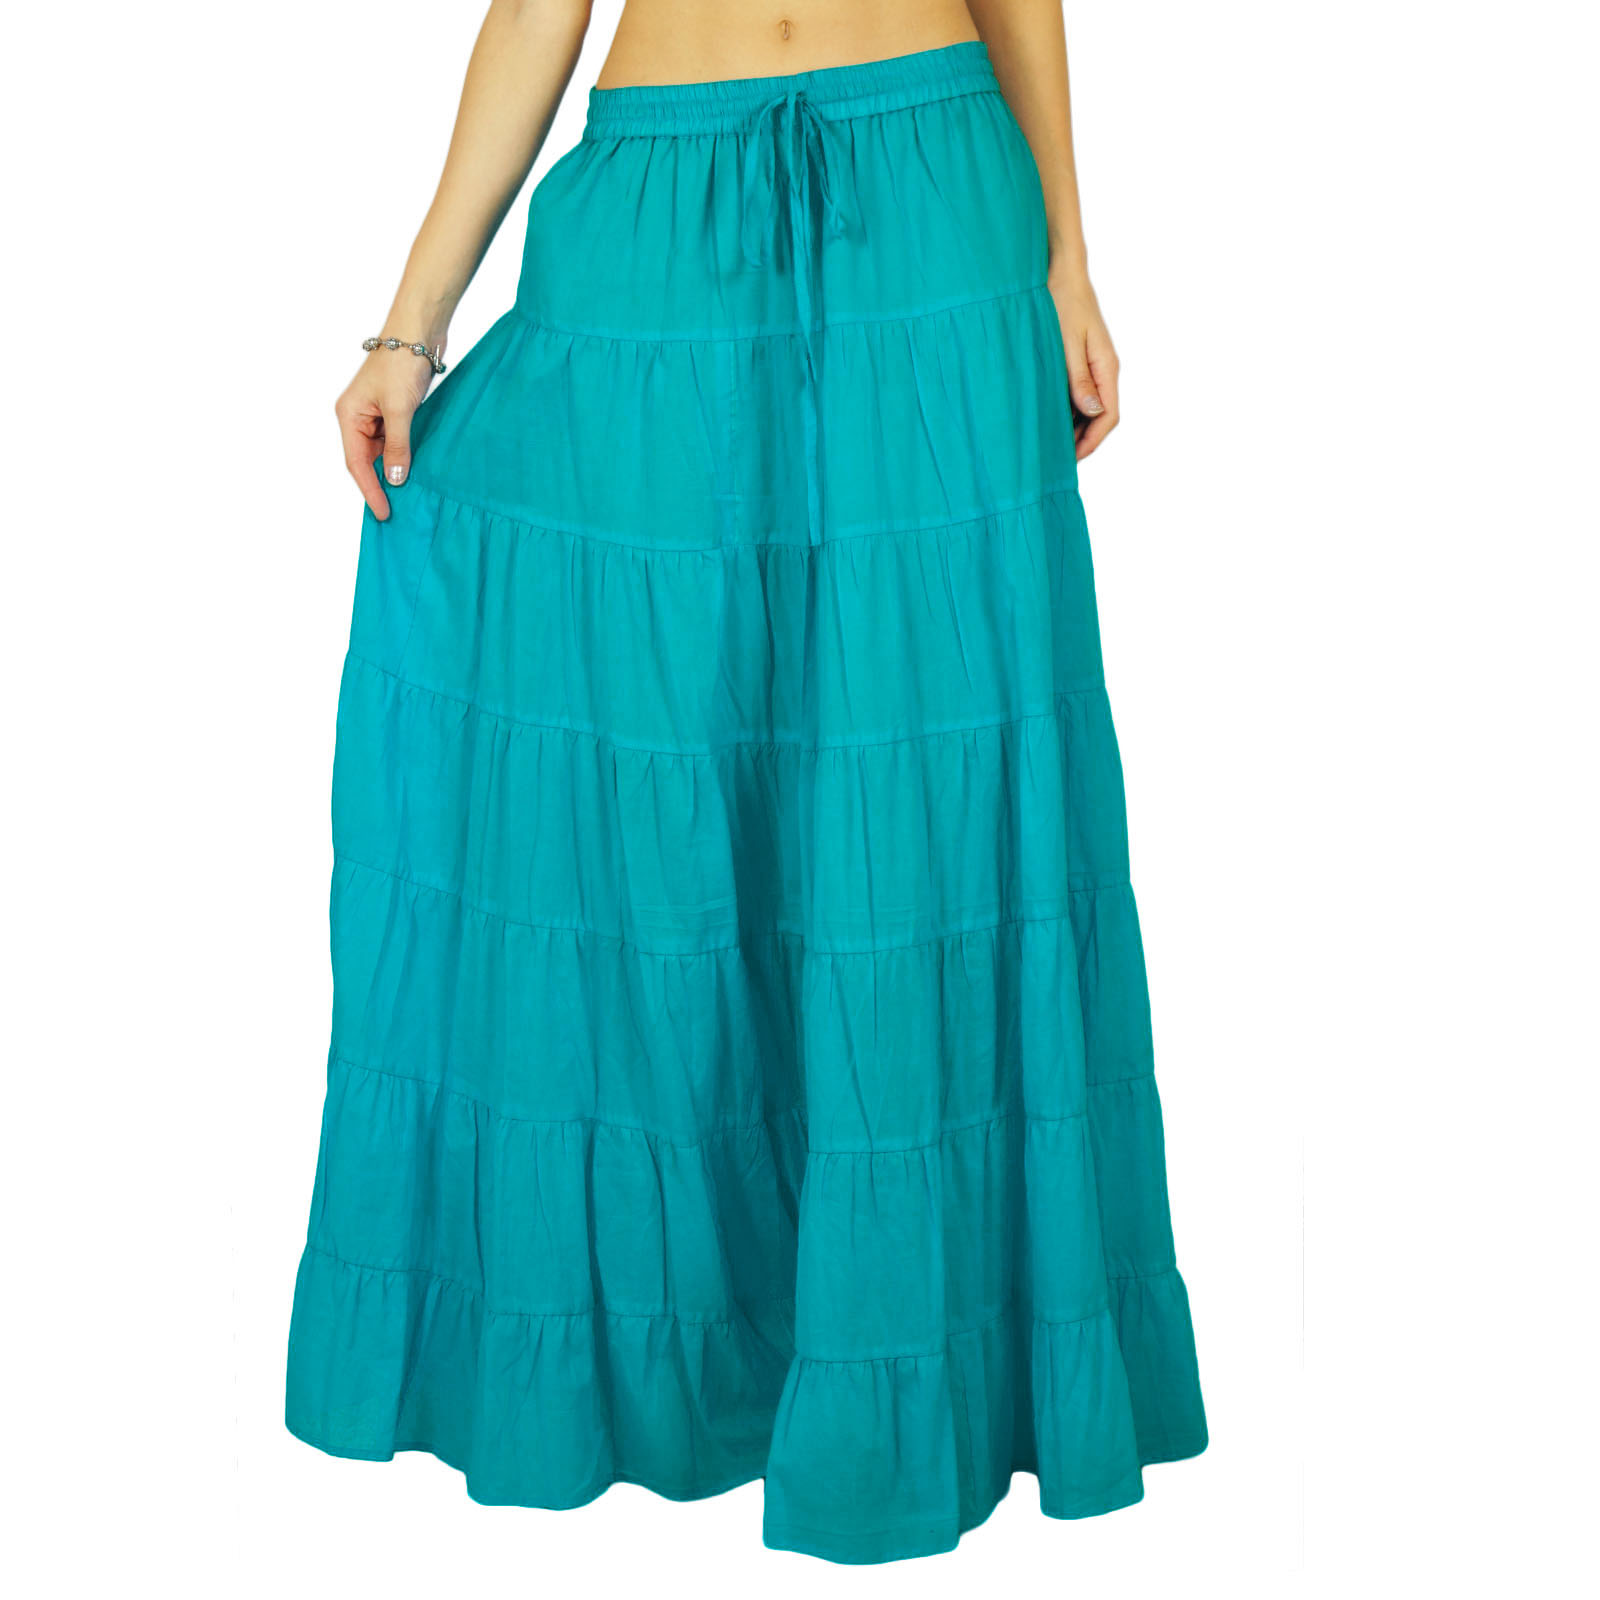 Phagun Womens Long Skirt Bohemian Gypsy Tiered Cotton Maxi Skirt Beach Wear 